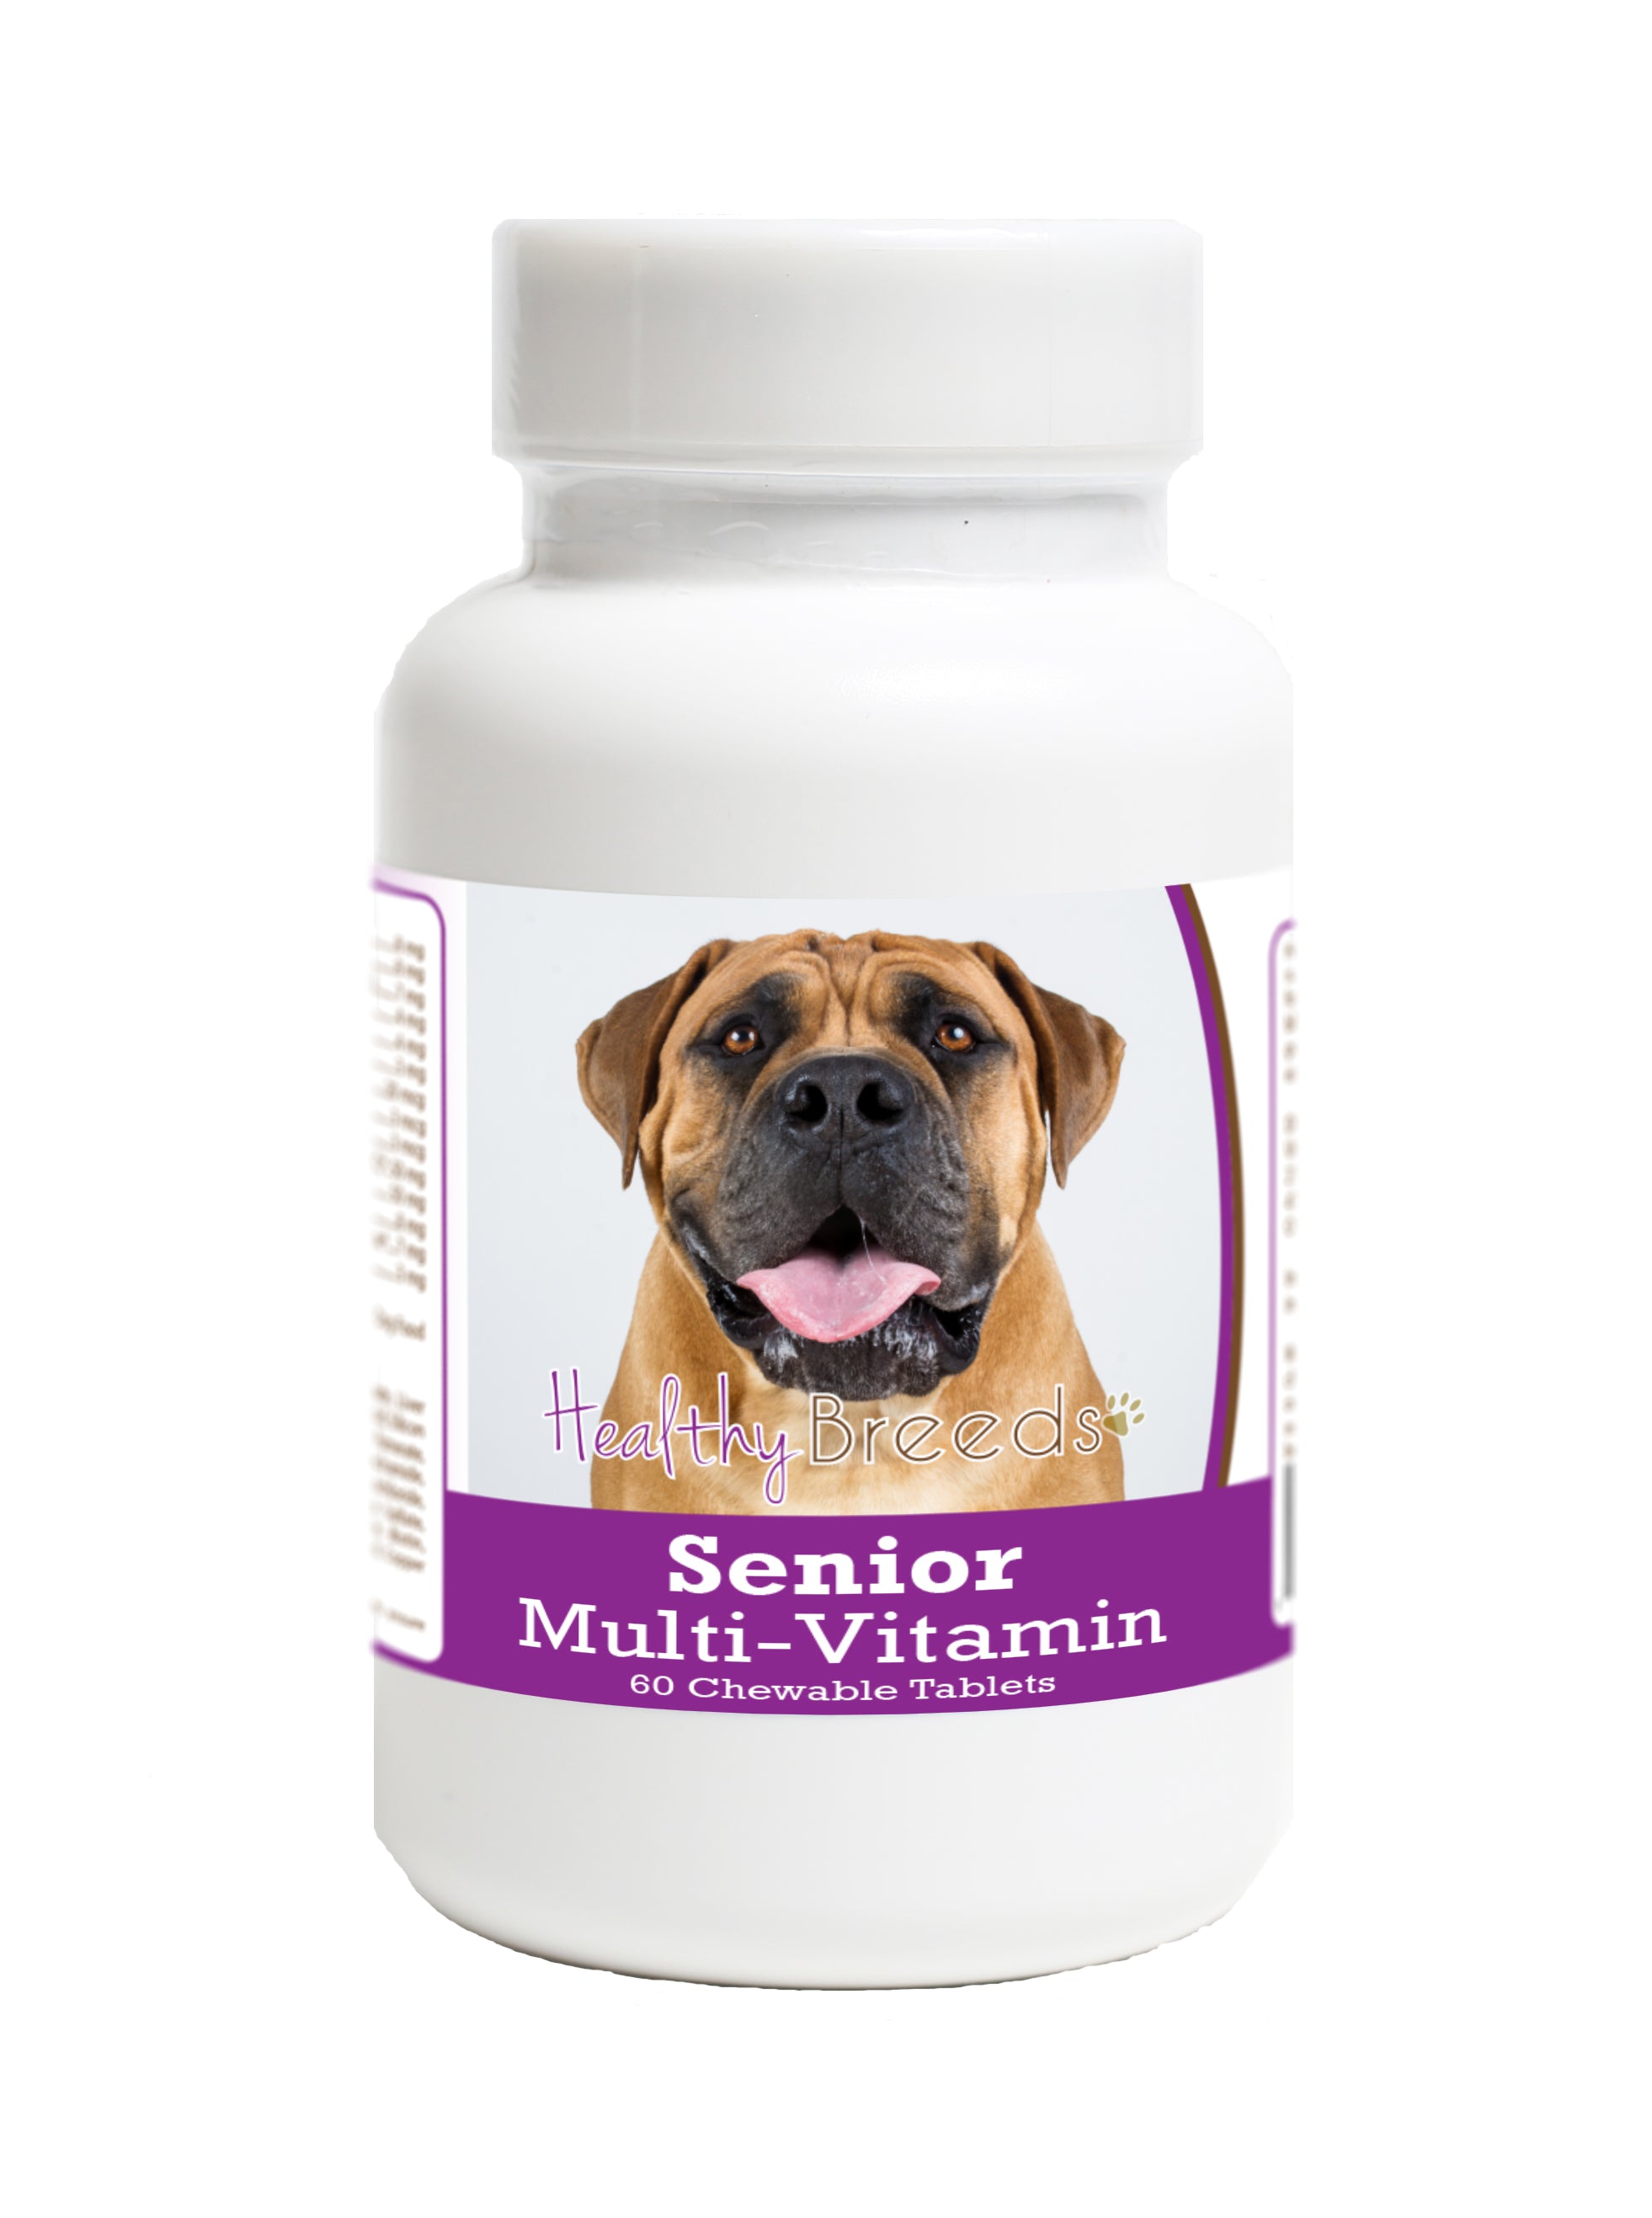 Boerboel Senior Dog Multivitamin Tablets 60 Count